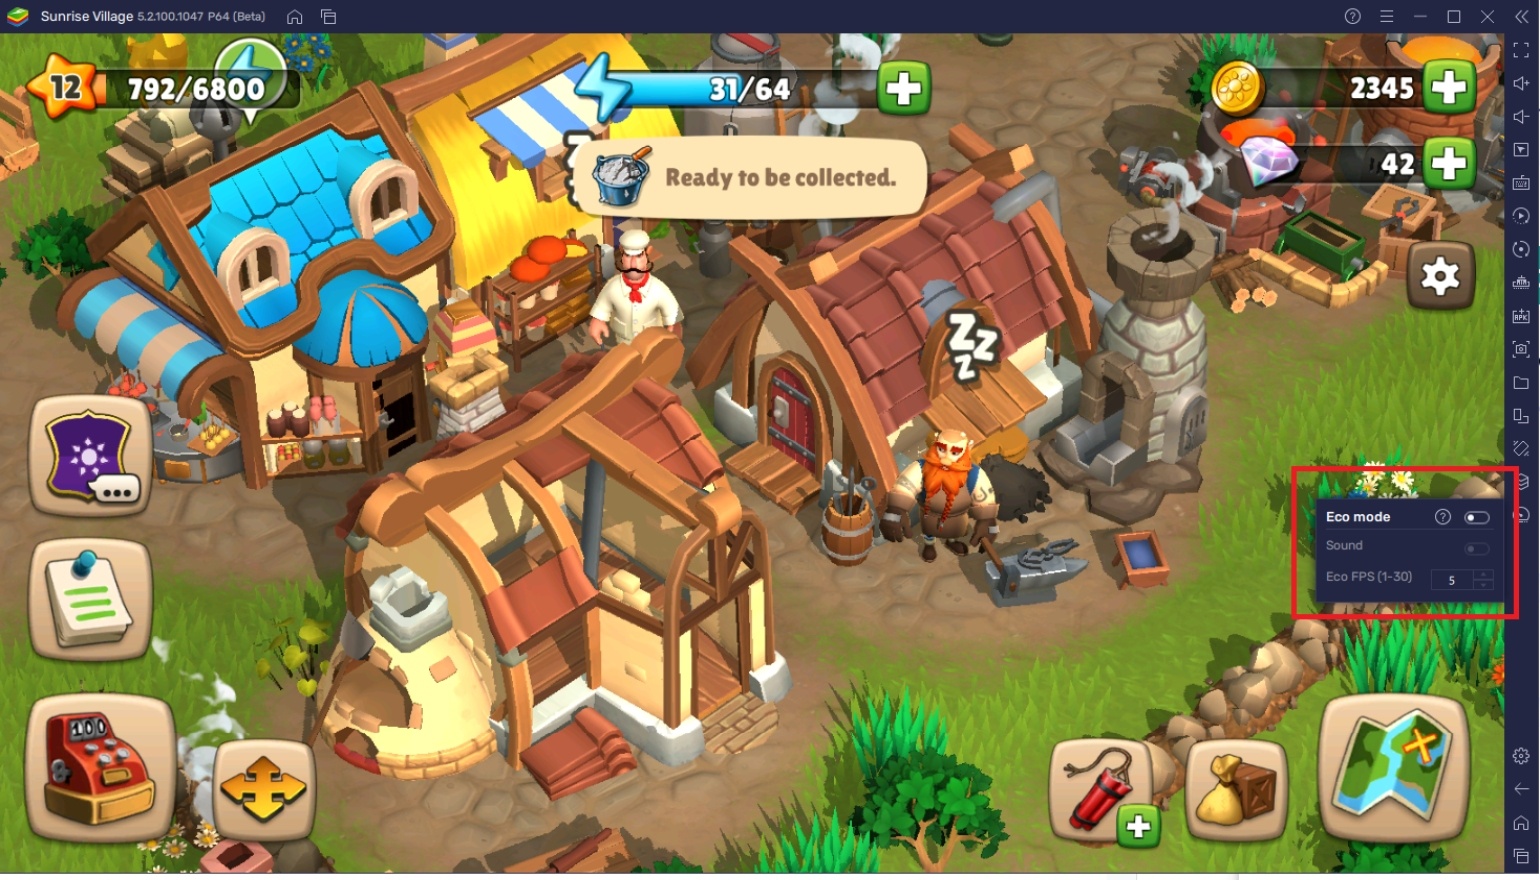 BlueStacks' Beginners Guide to Playing Sunrise Village